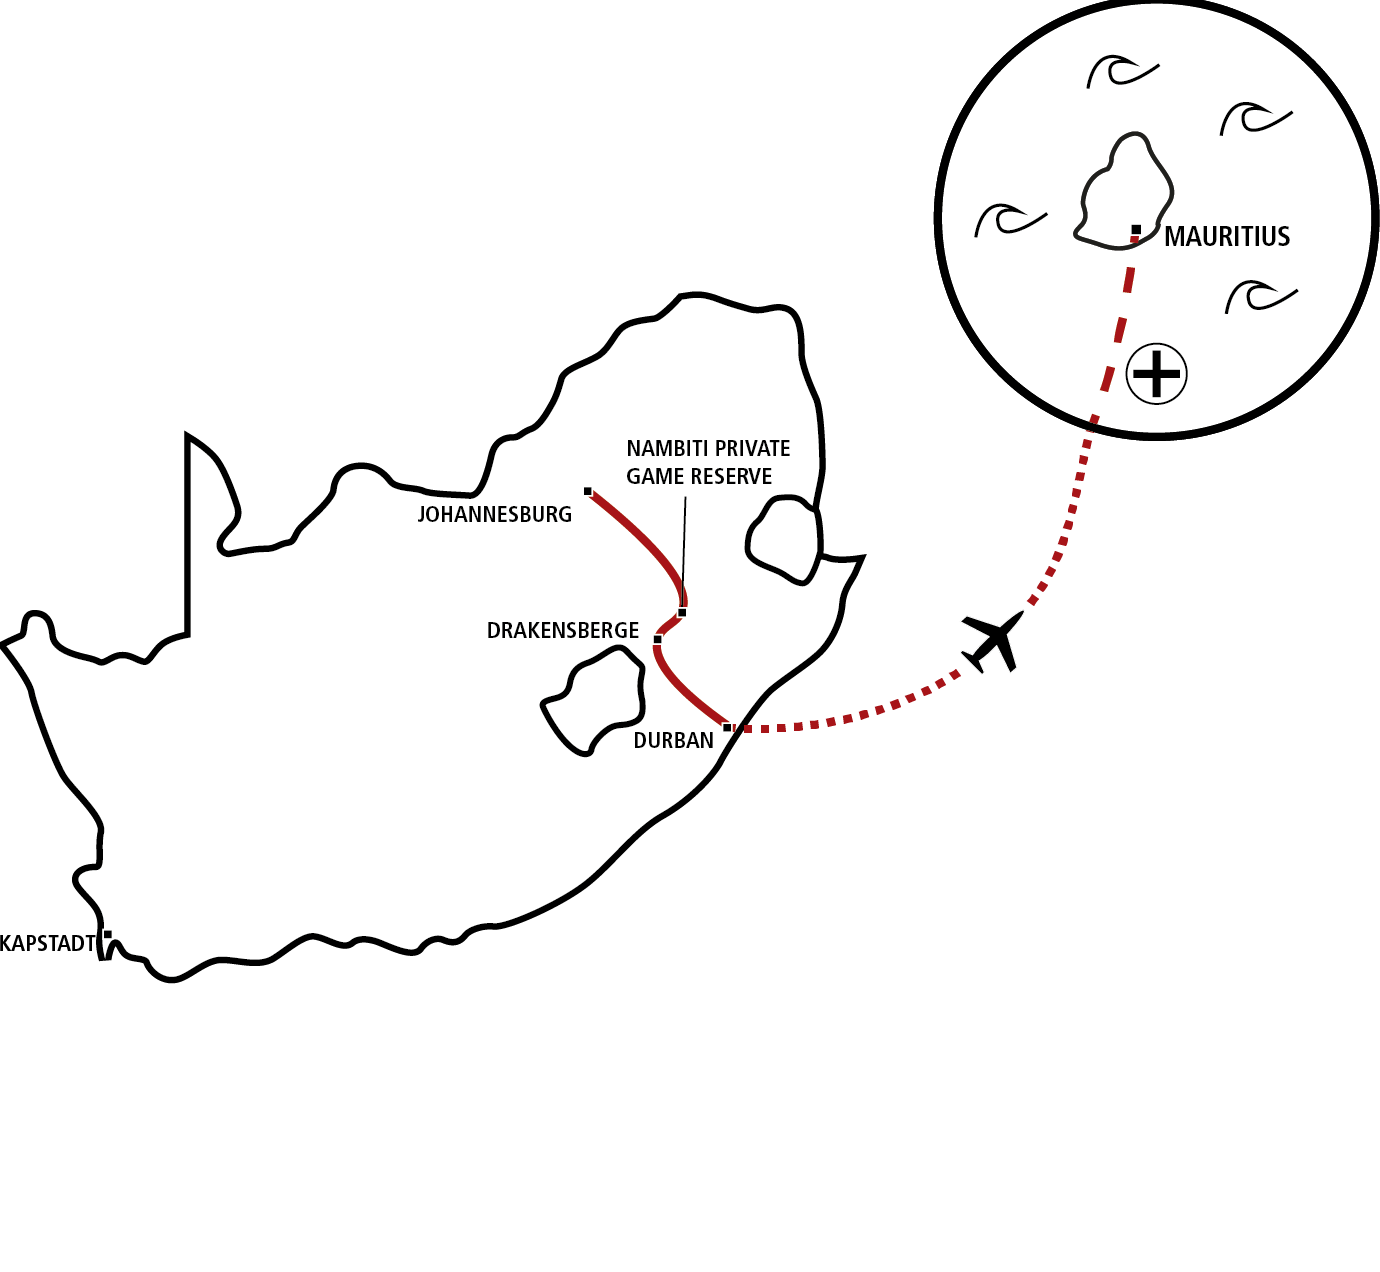 Drakensberge, Big Five & Mauritius